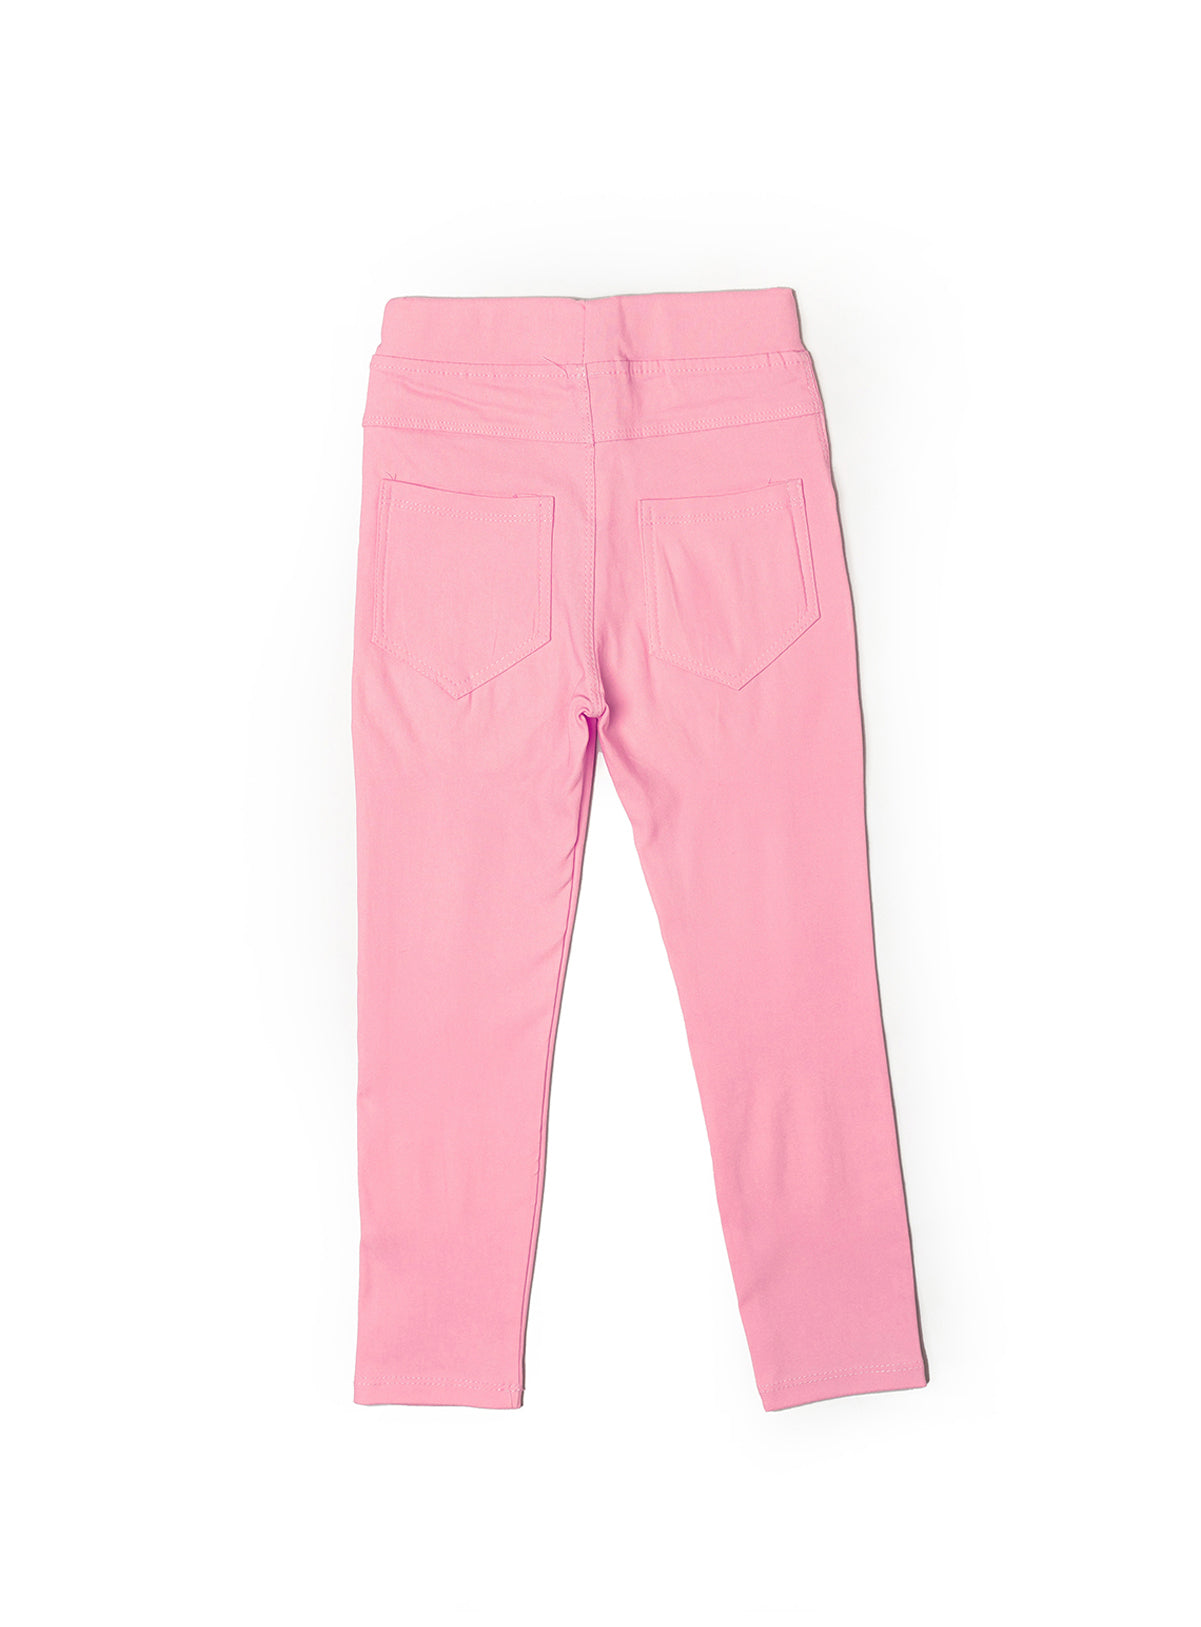 bubble gum pink skinny pants